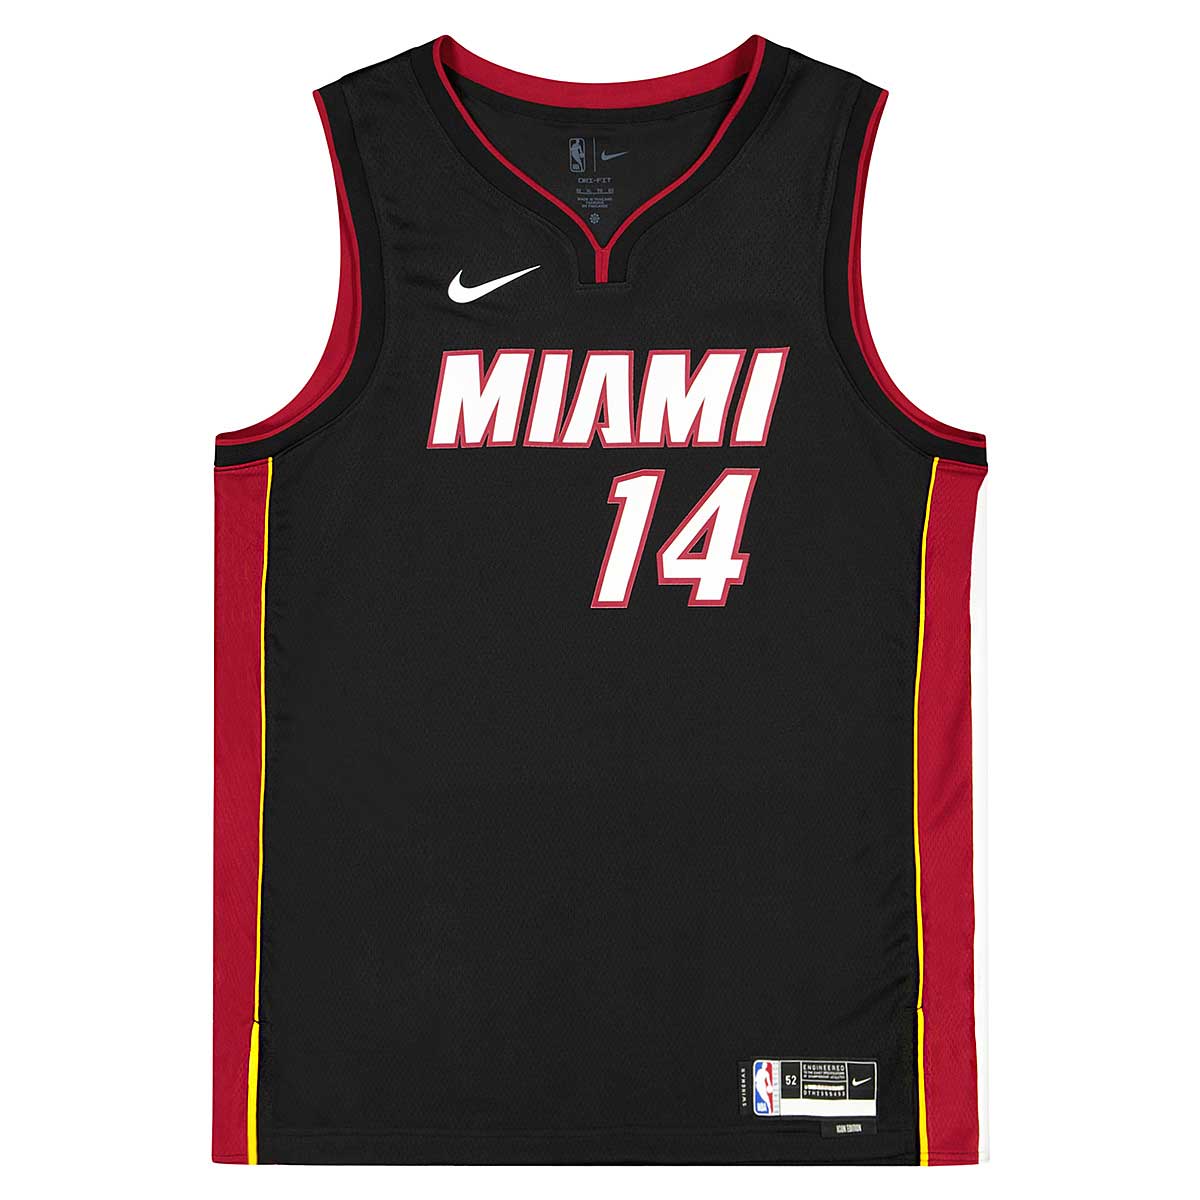 Nike Men's Miami Heat NBA Icon Swingman Shorts - Black, Size: Medium